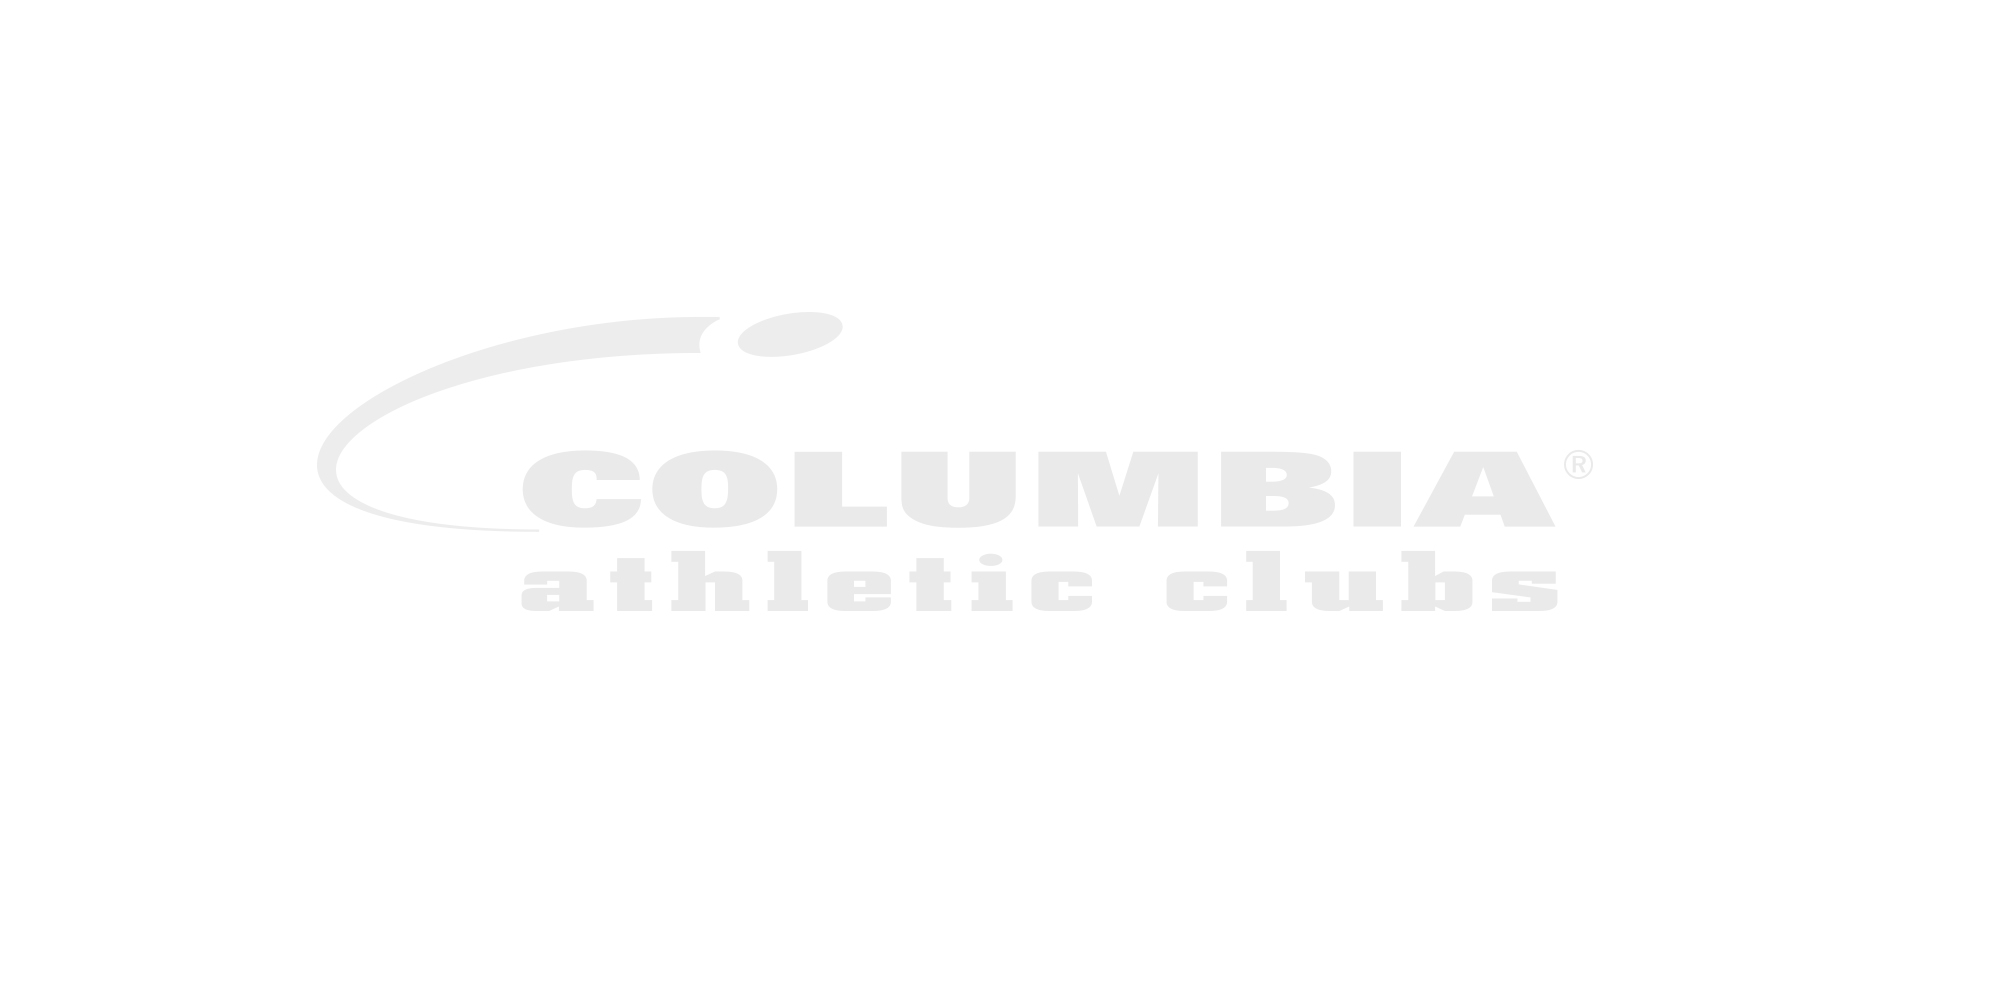 Columbia Athletic Clubs - Juanita Bay, 11450 98th Ave NE, Kirkland, WA -  MapQuest